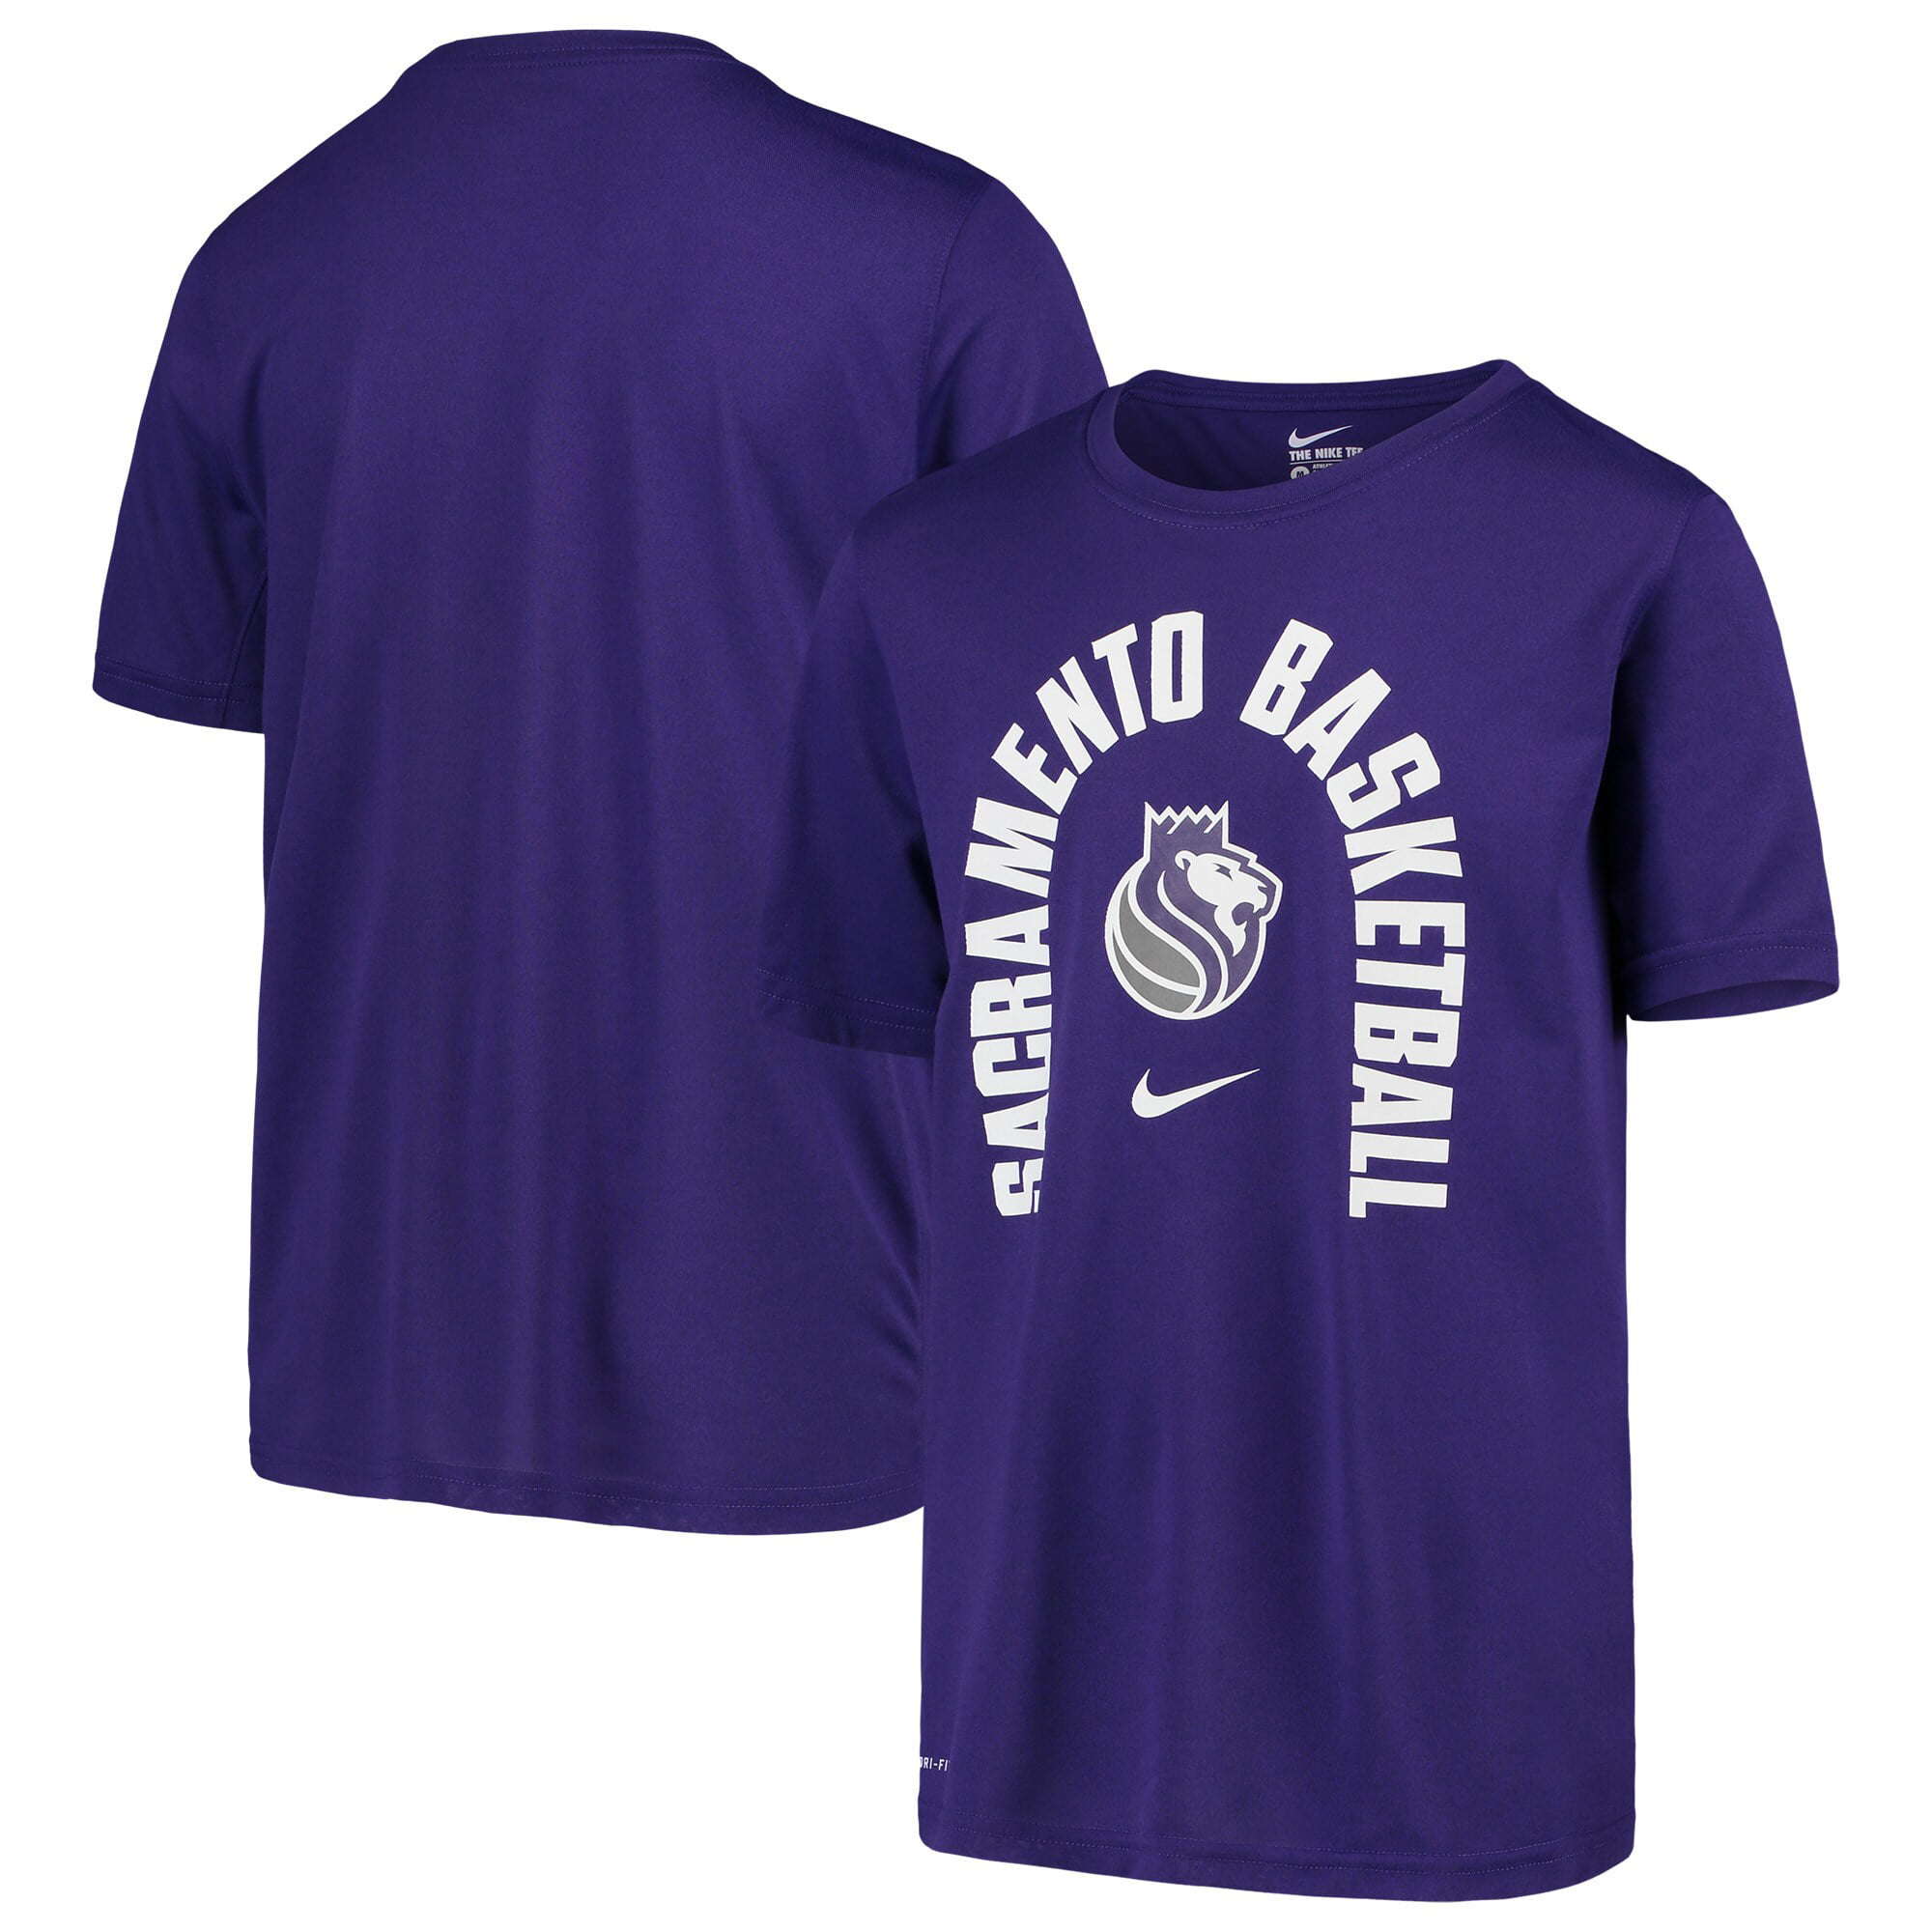 USA Basketball Nike Legend 2.0 T-Shirt - Charcoal - Walmart.com